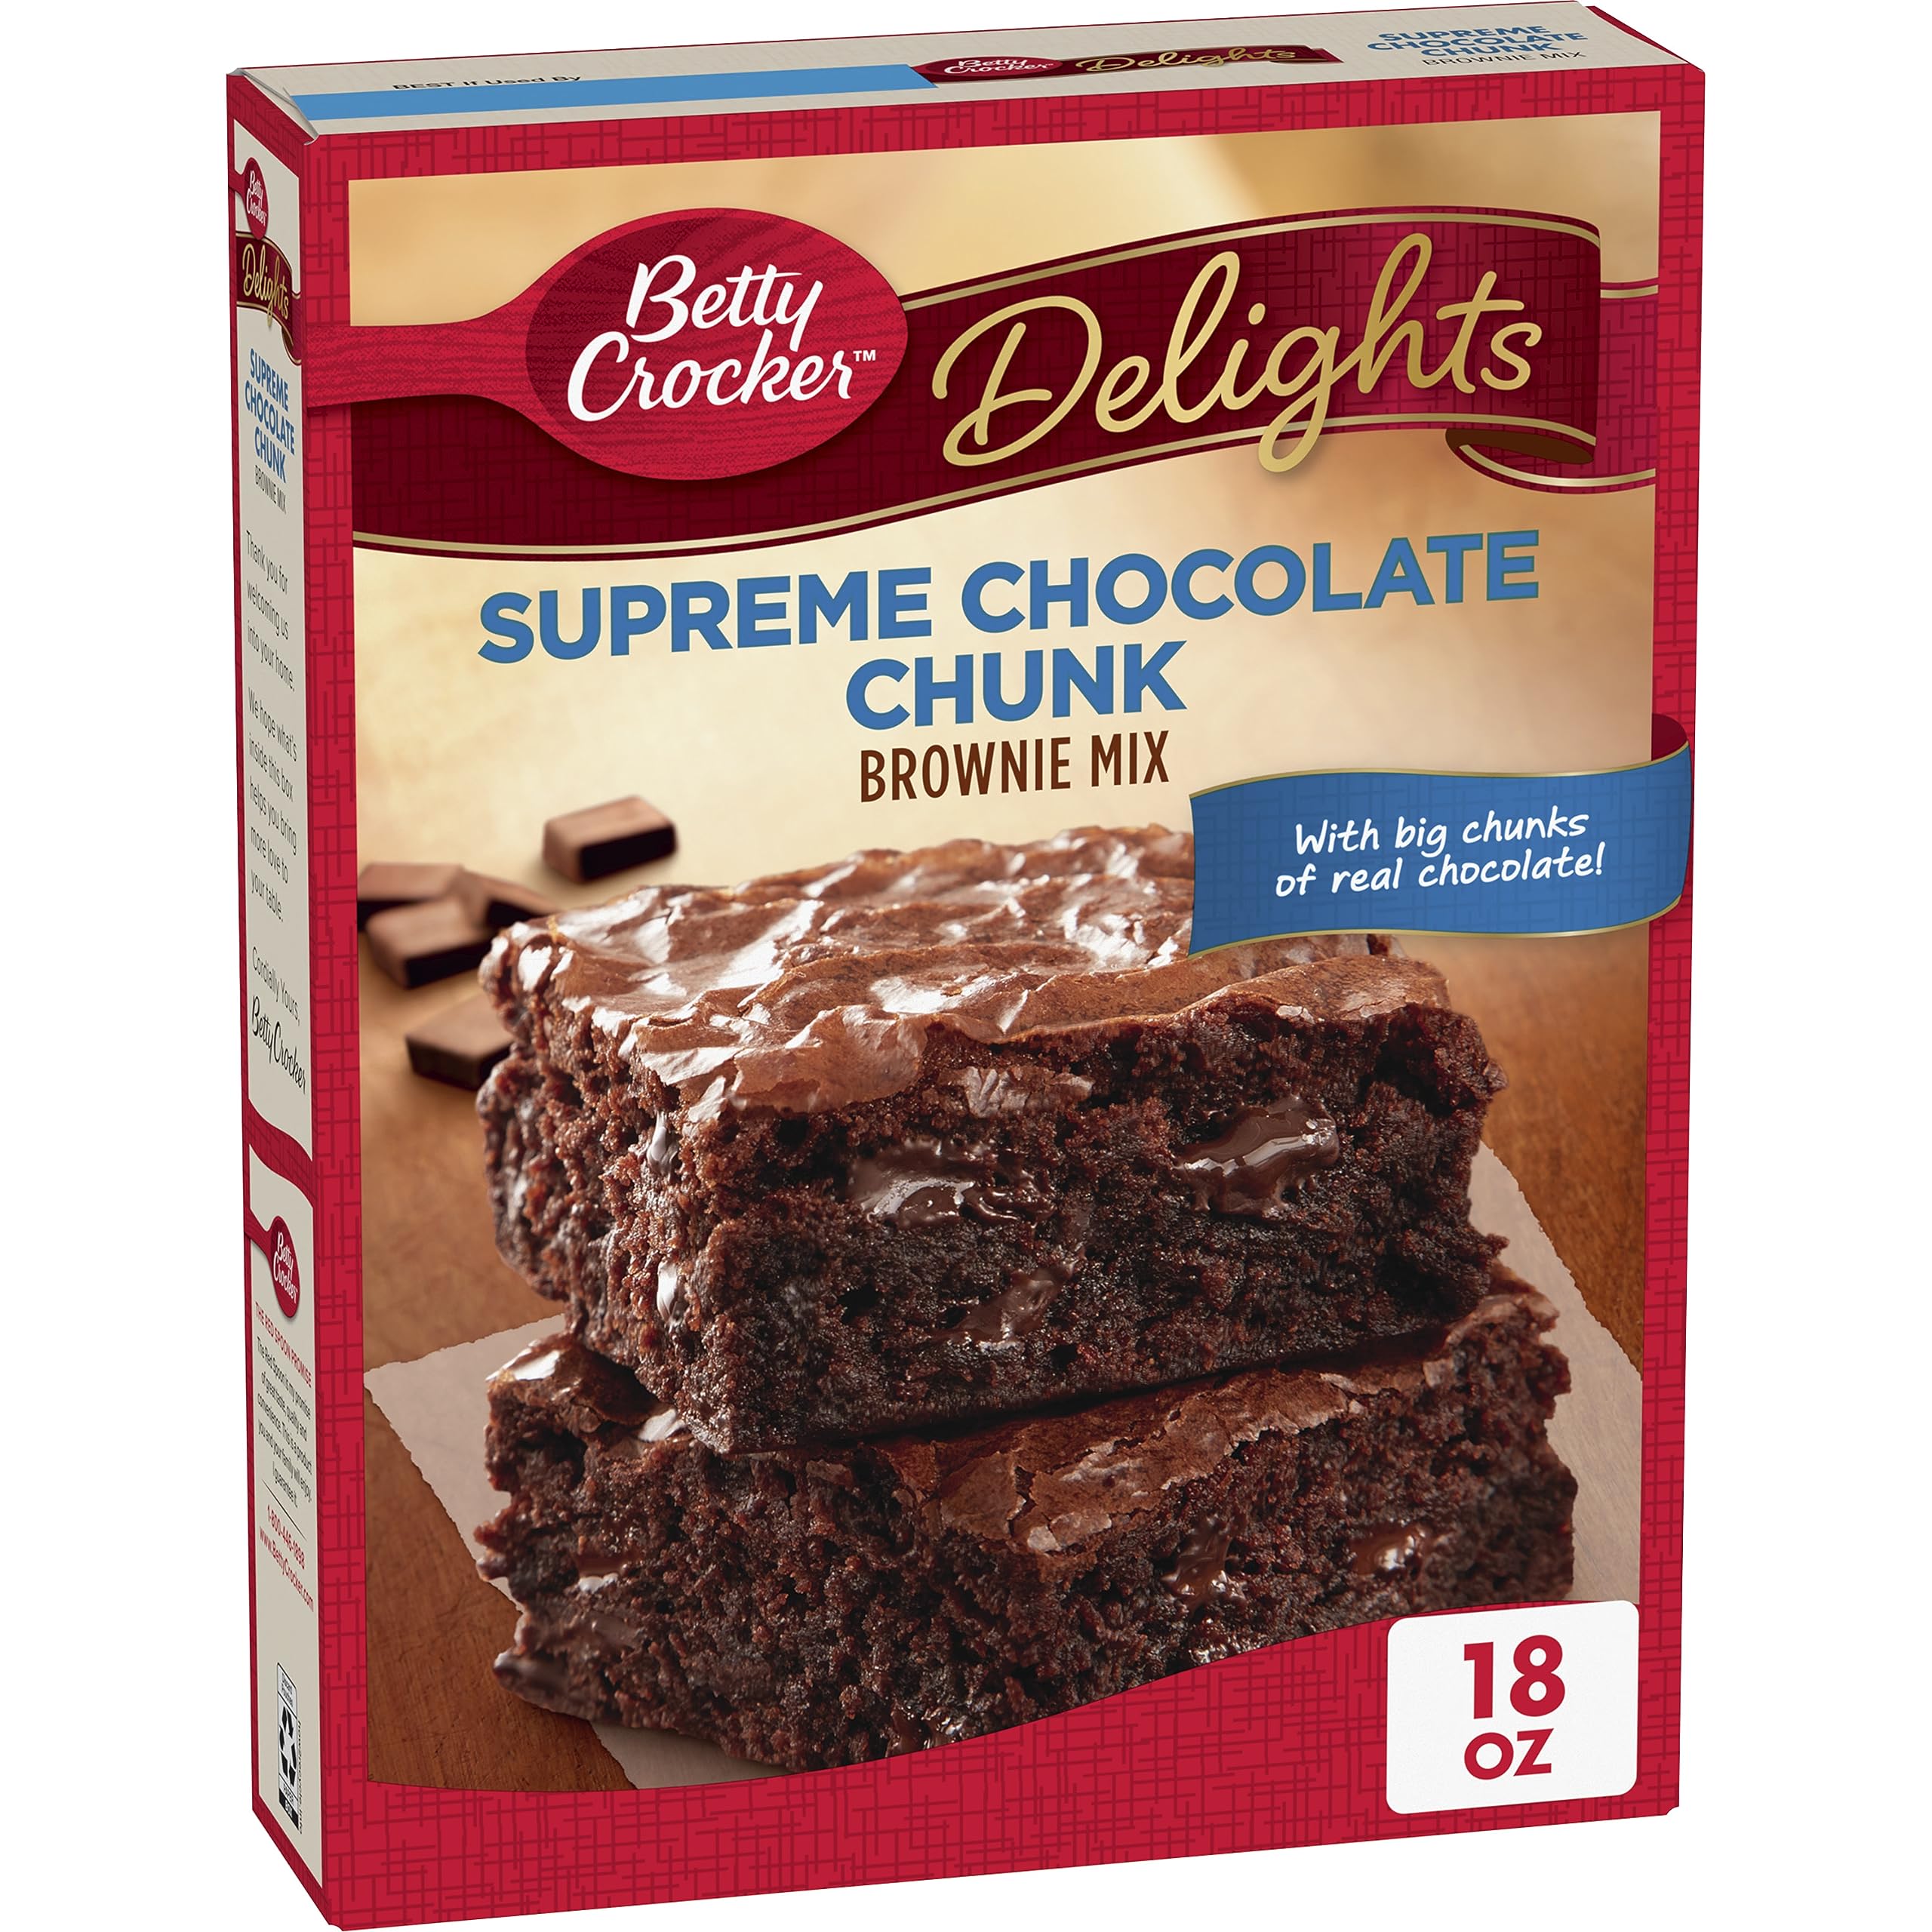 Betty Crocker Delights Supreme Chocolate Chunk Brownie Mix, 18 oz. $1.94 w/S&S $1.82 w/S&S 5+ items